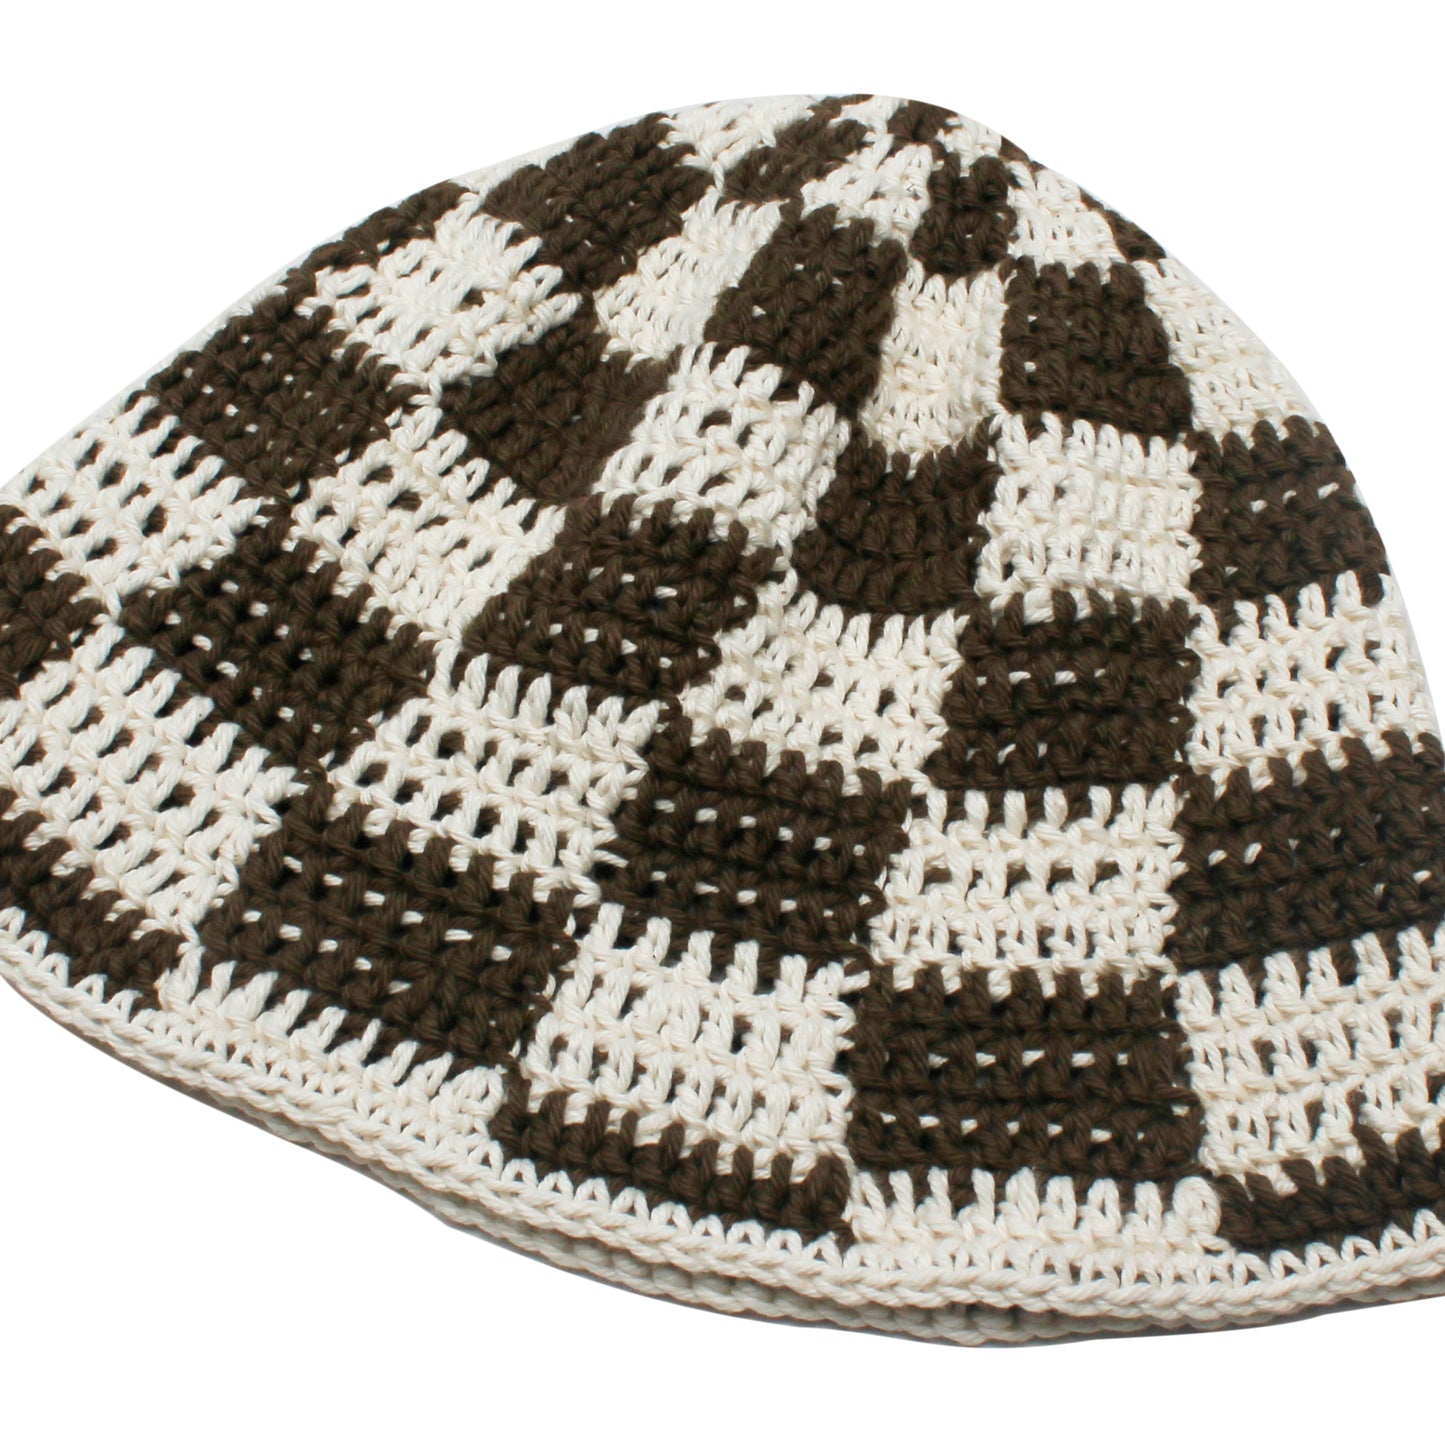 Sol Sol "Checkered" Crochet Hat - Brown